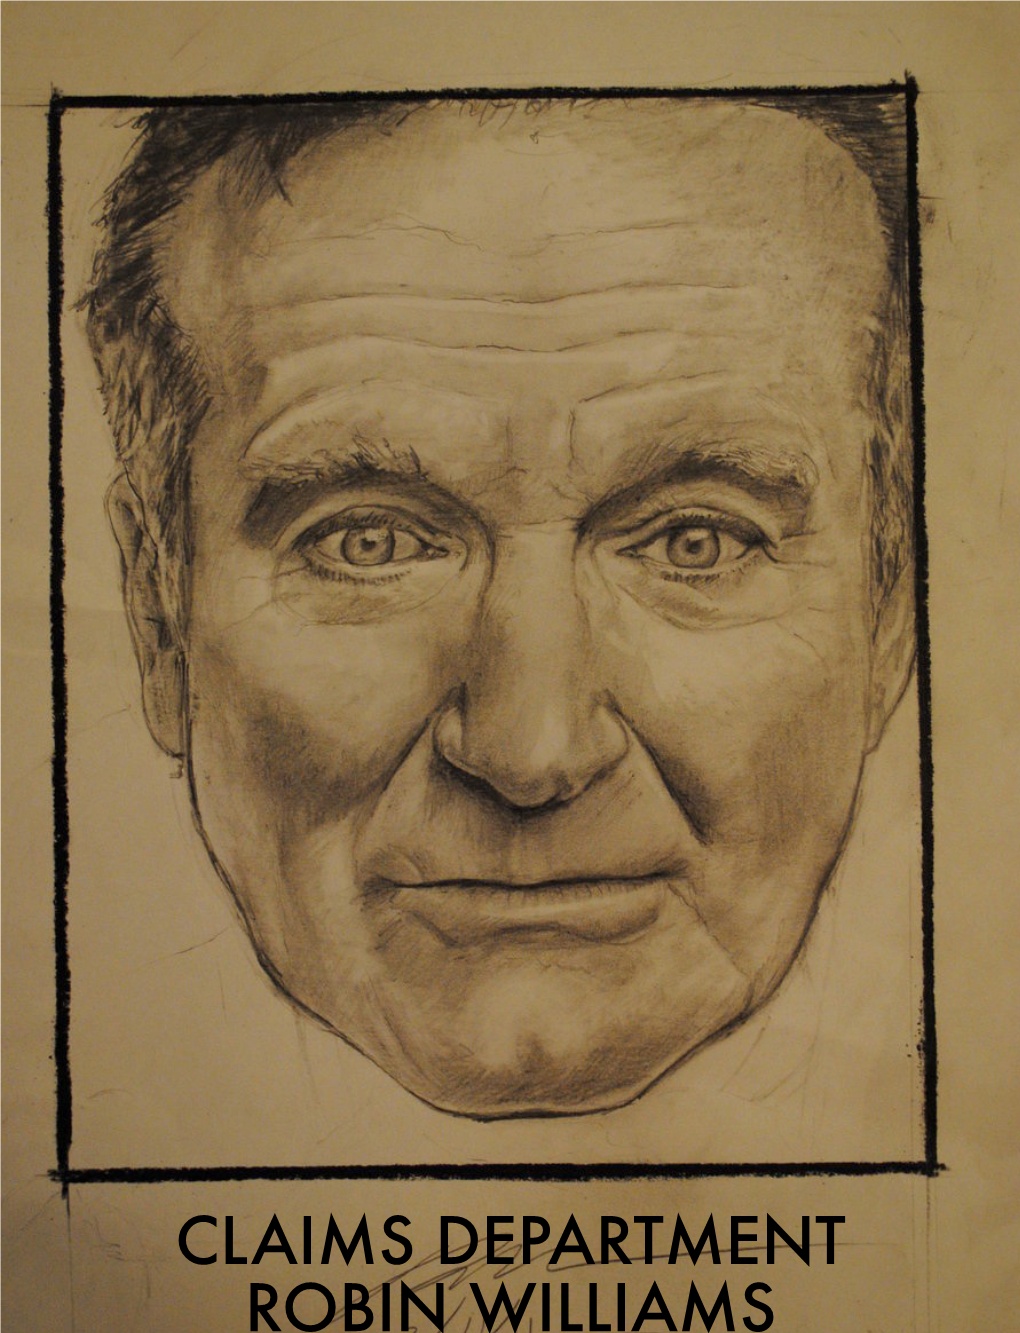 Claims Department Robin Williams Robin Williams 1951 - 2014